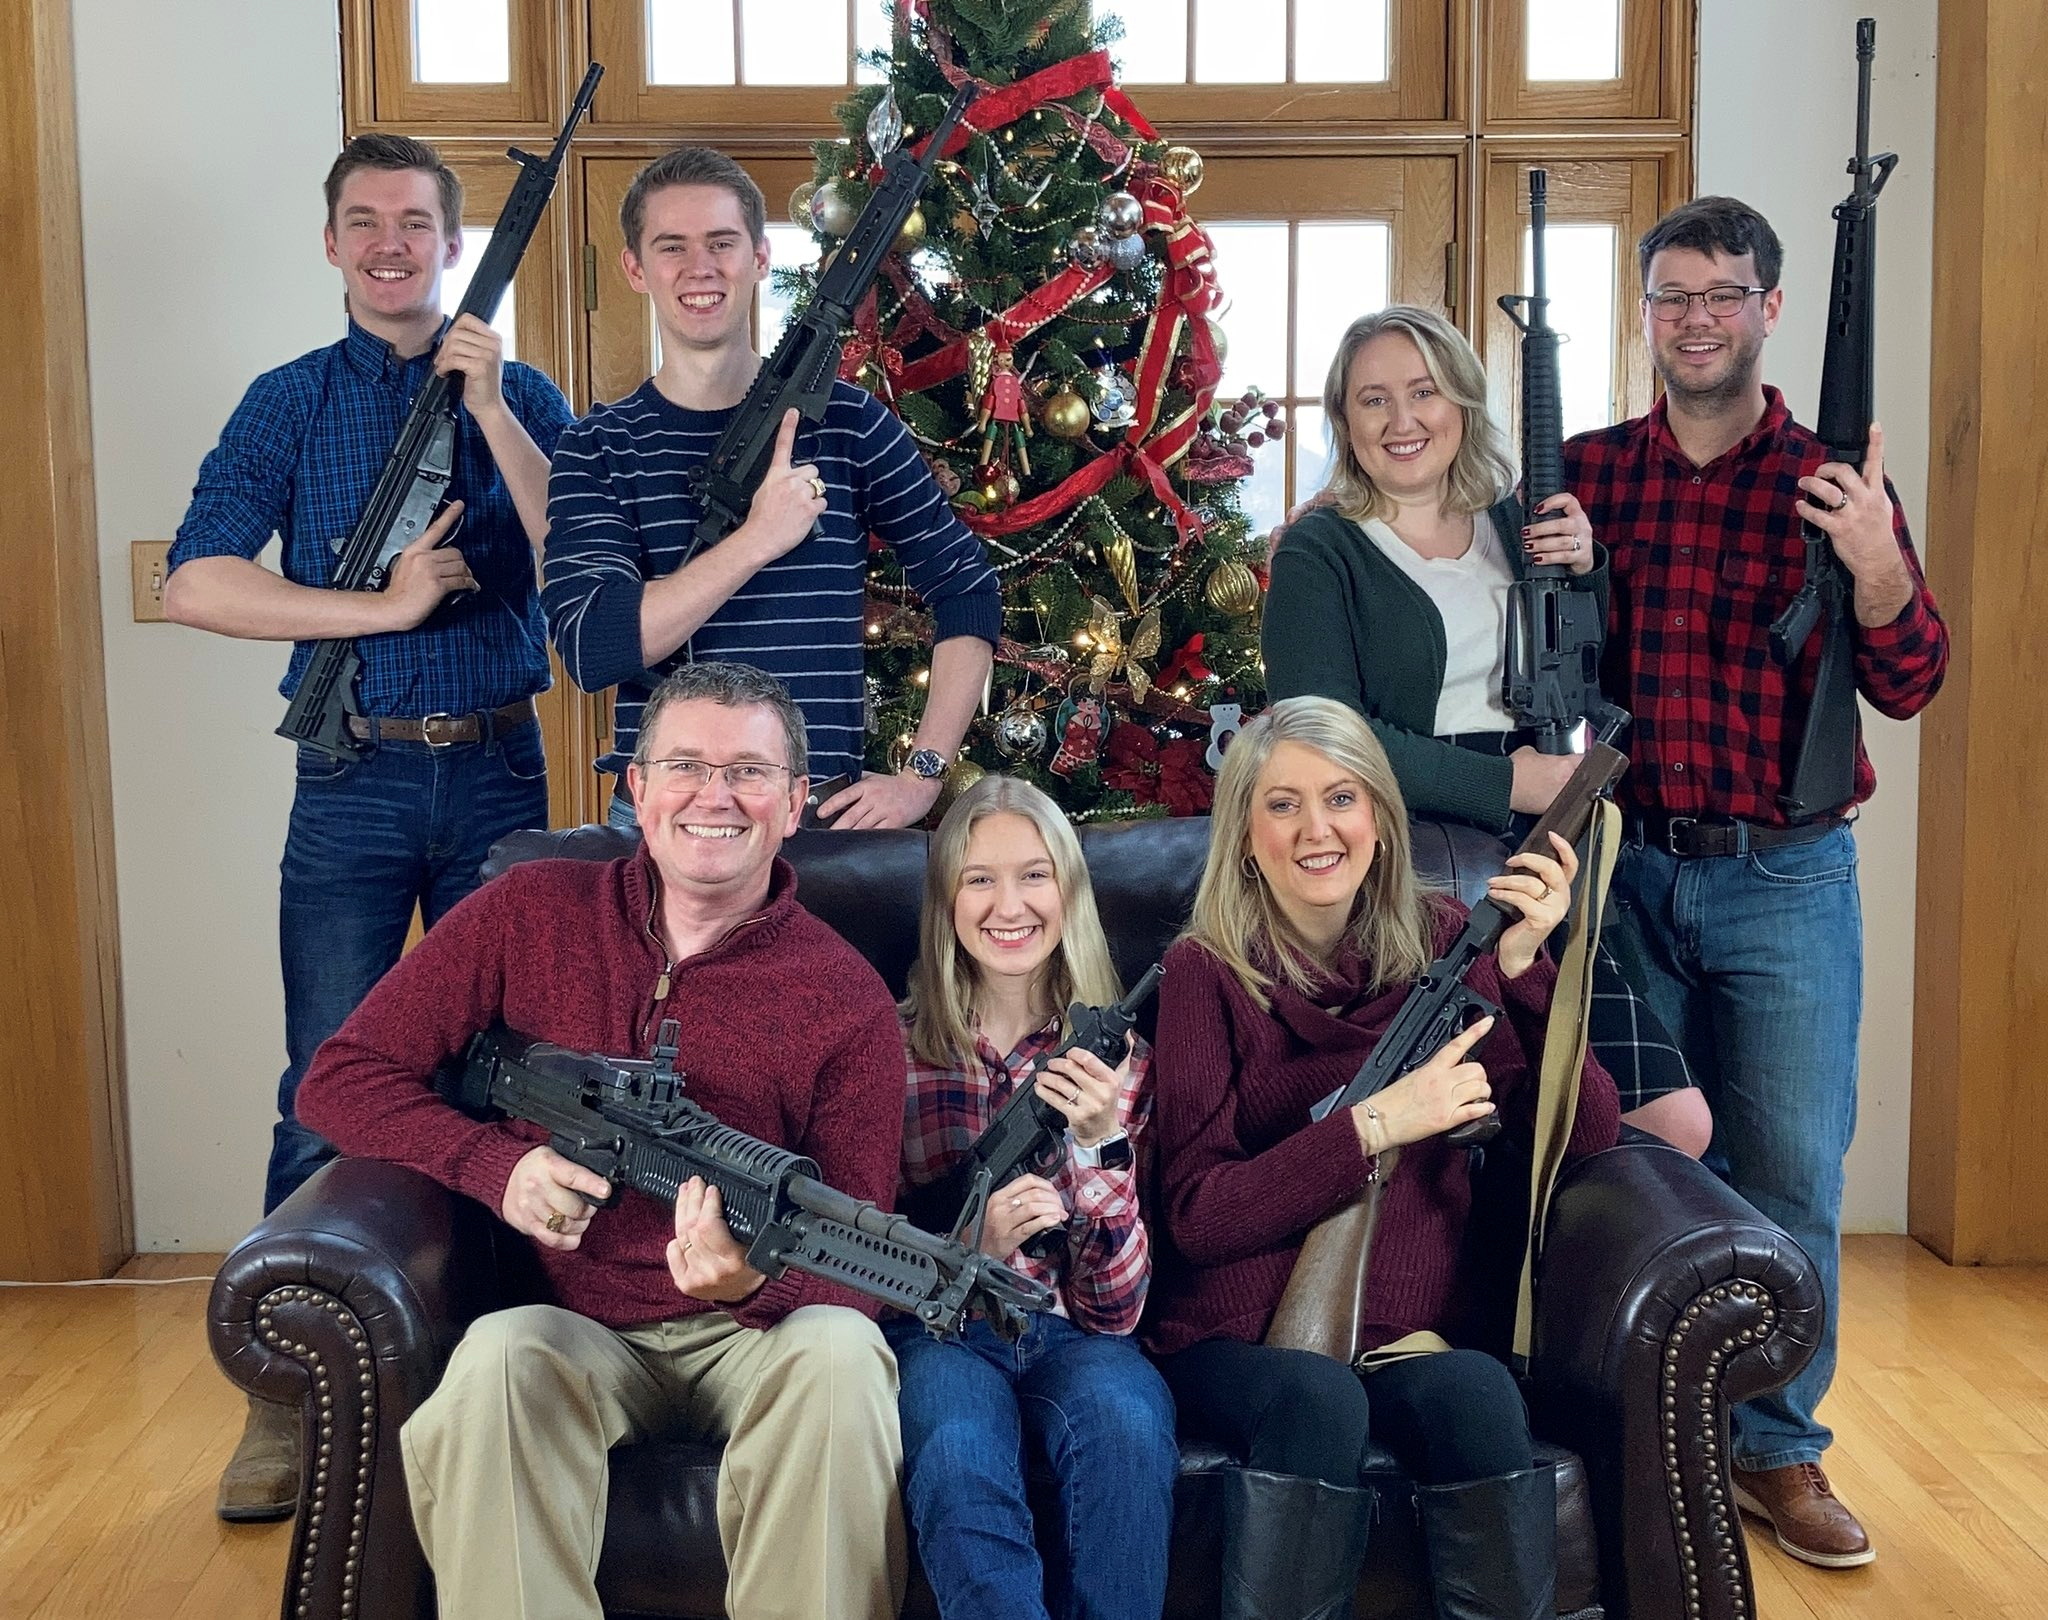 U.S. Rep. Thomas Massie (R-KY) tweets a Christmas photo of his family holding guns